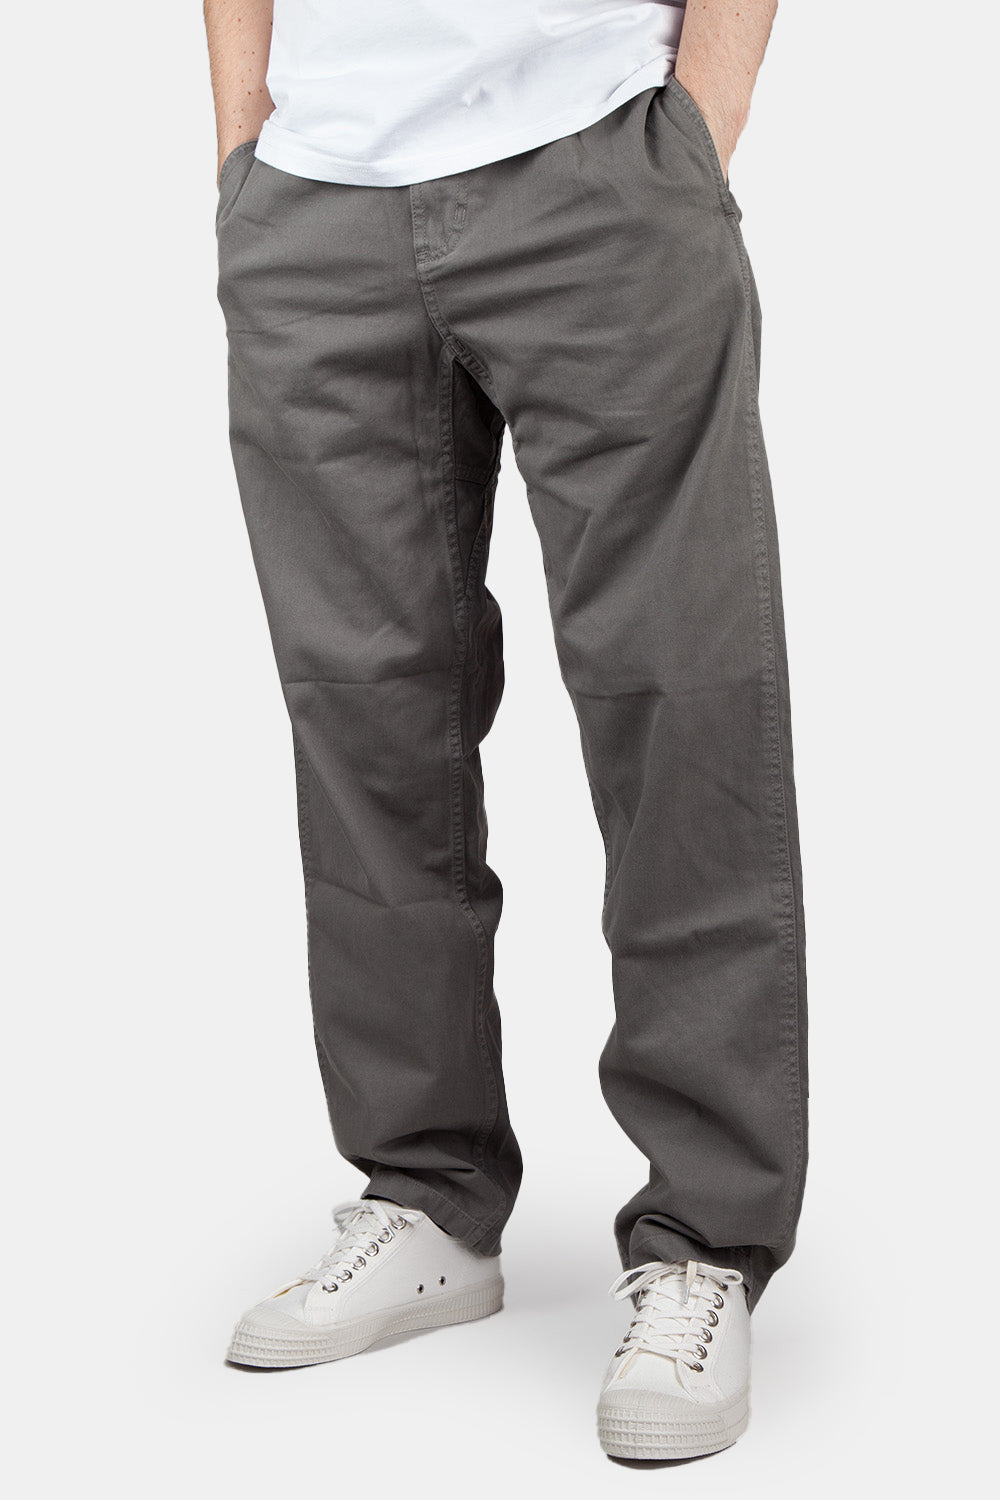 Gramicci G Pants Double-Ringspun Organic Cotton Twill (Charcoal Grey)